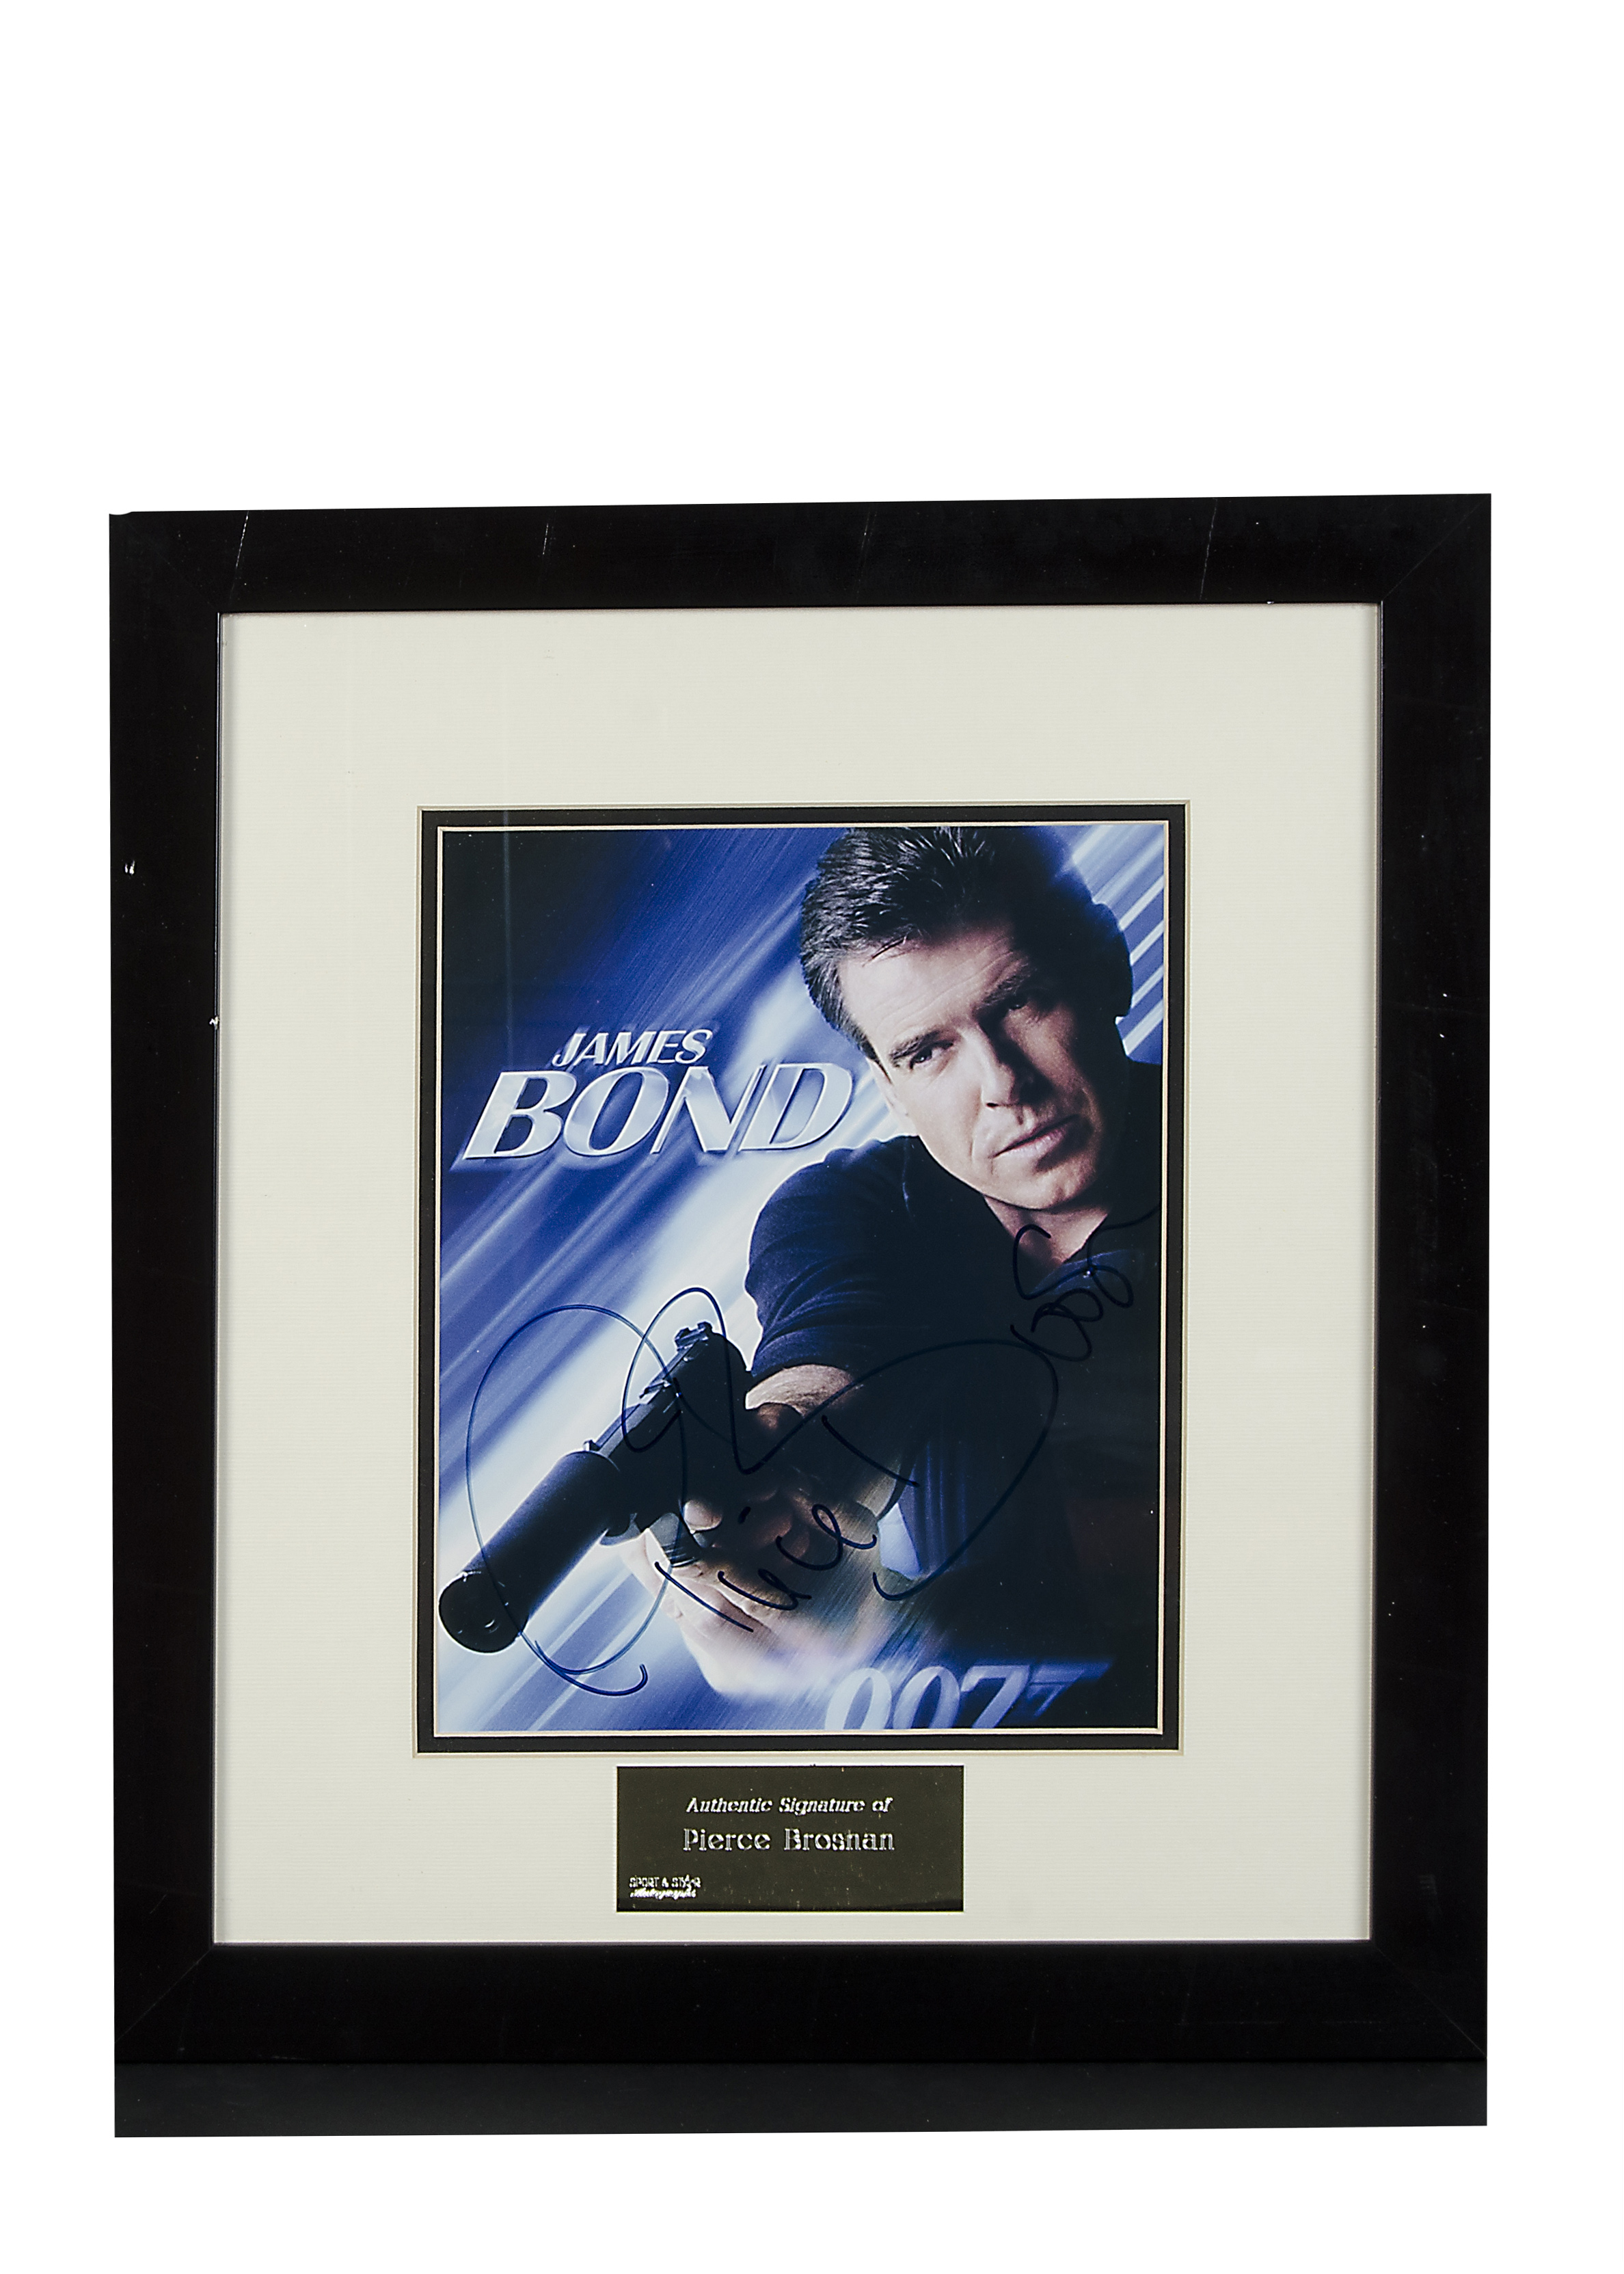 James Bond / Pierce Brosnan Autograph: Framed and glazed colour print signed Pierce Brosnan, with